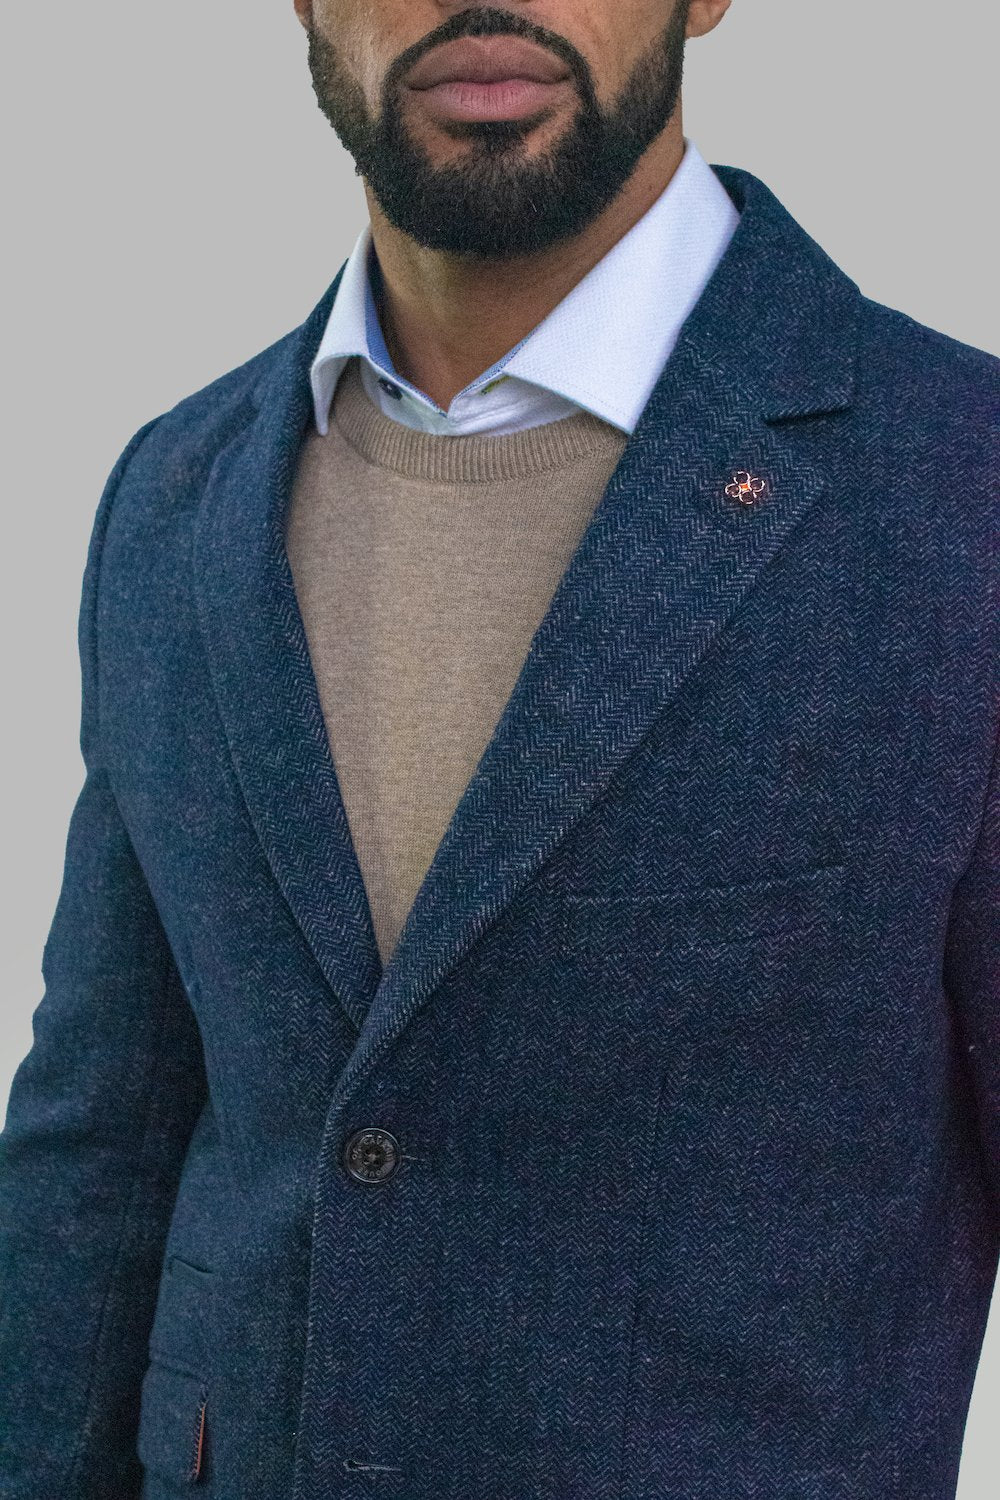 House of Cavani Wool Overcoat Tweed Jacket  3/4 Length  - Azure